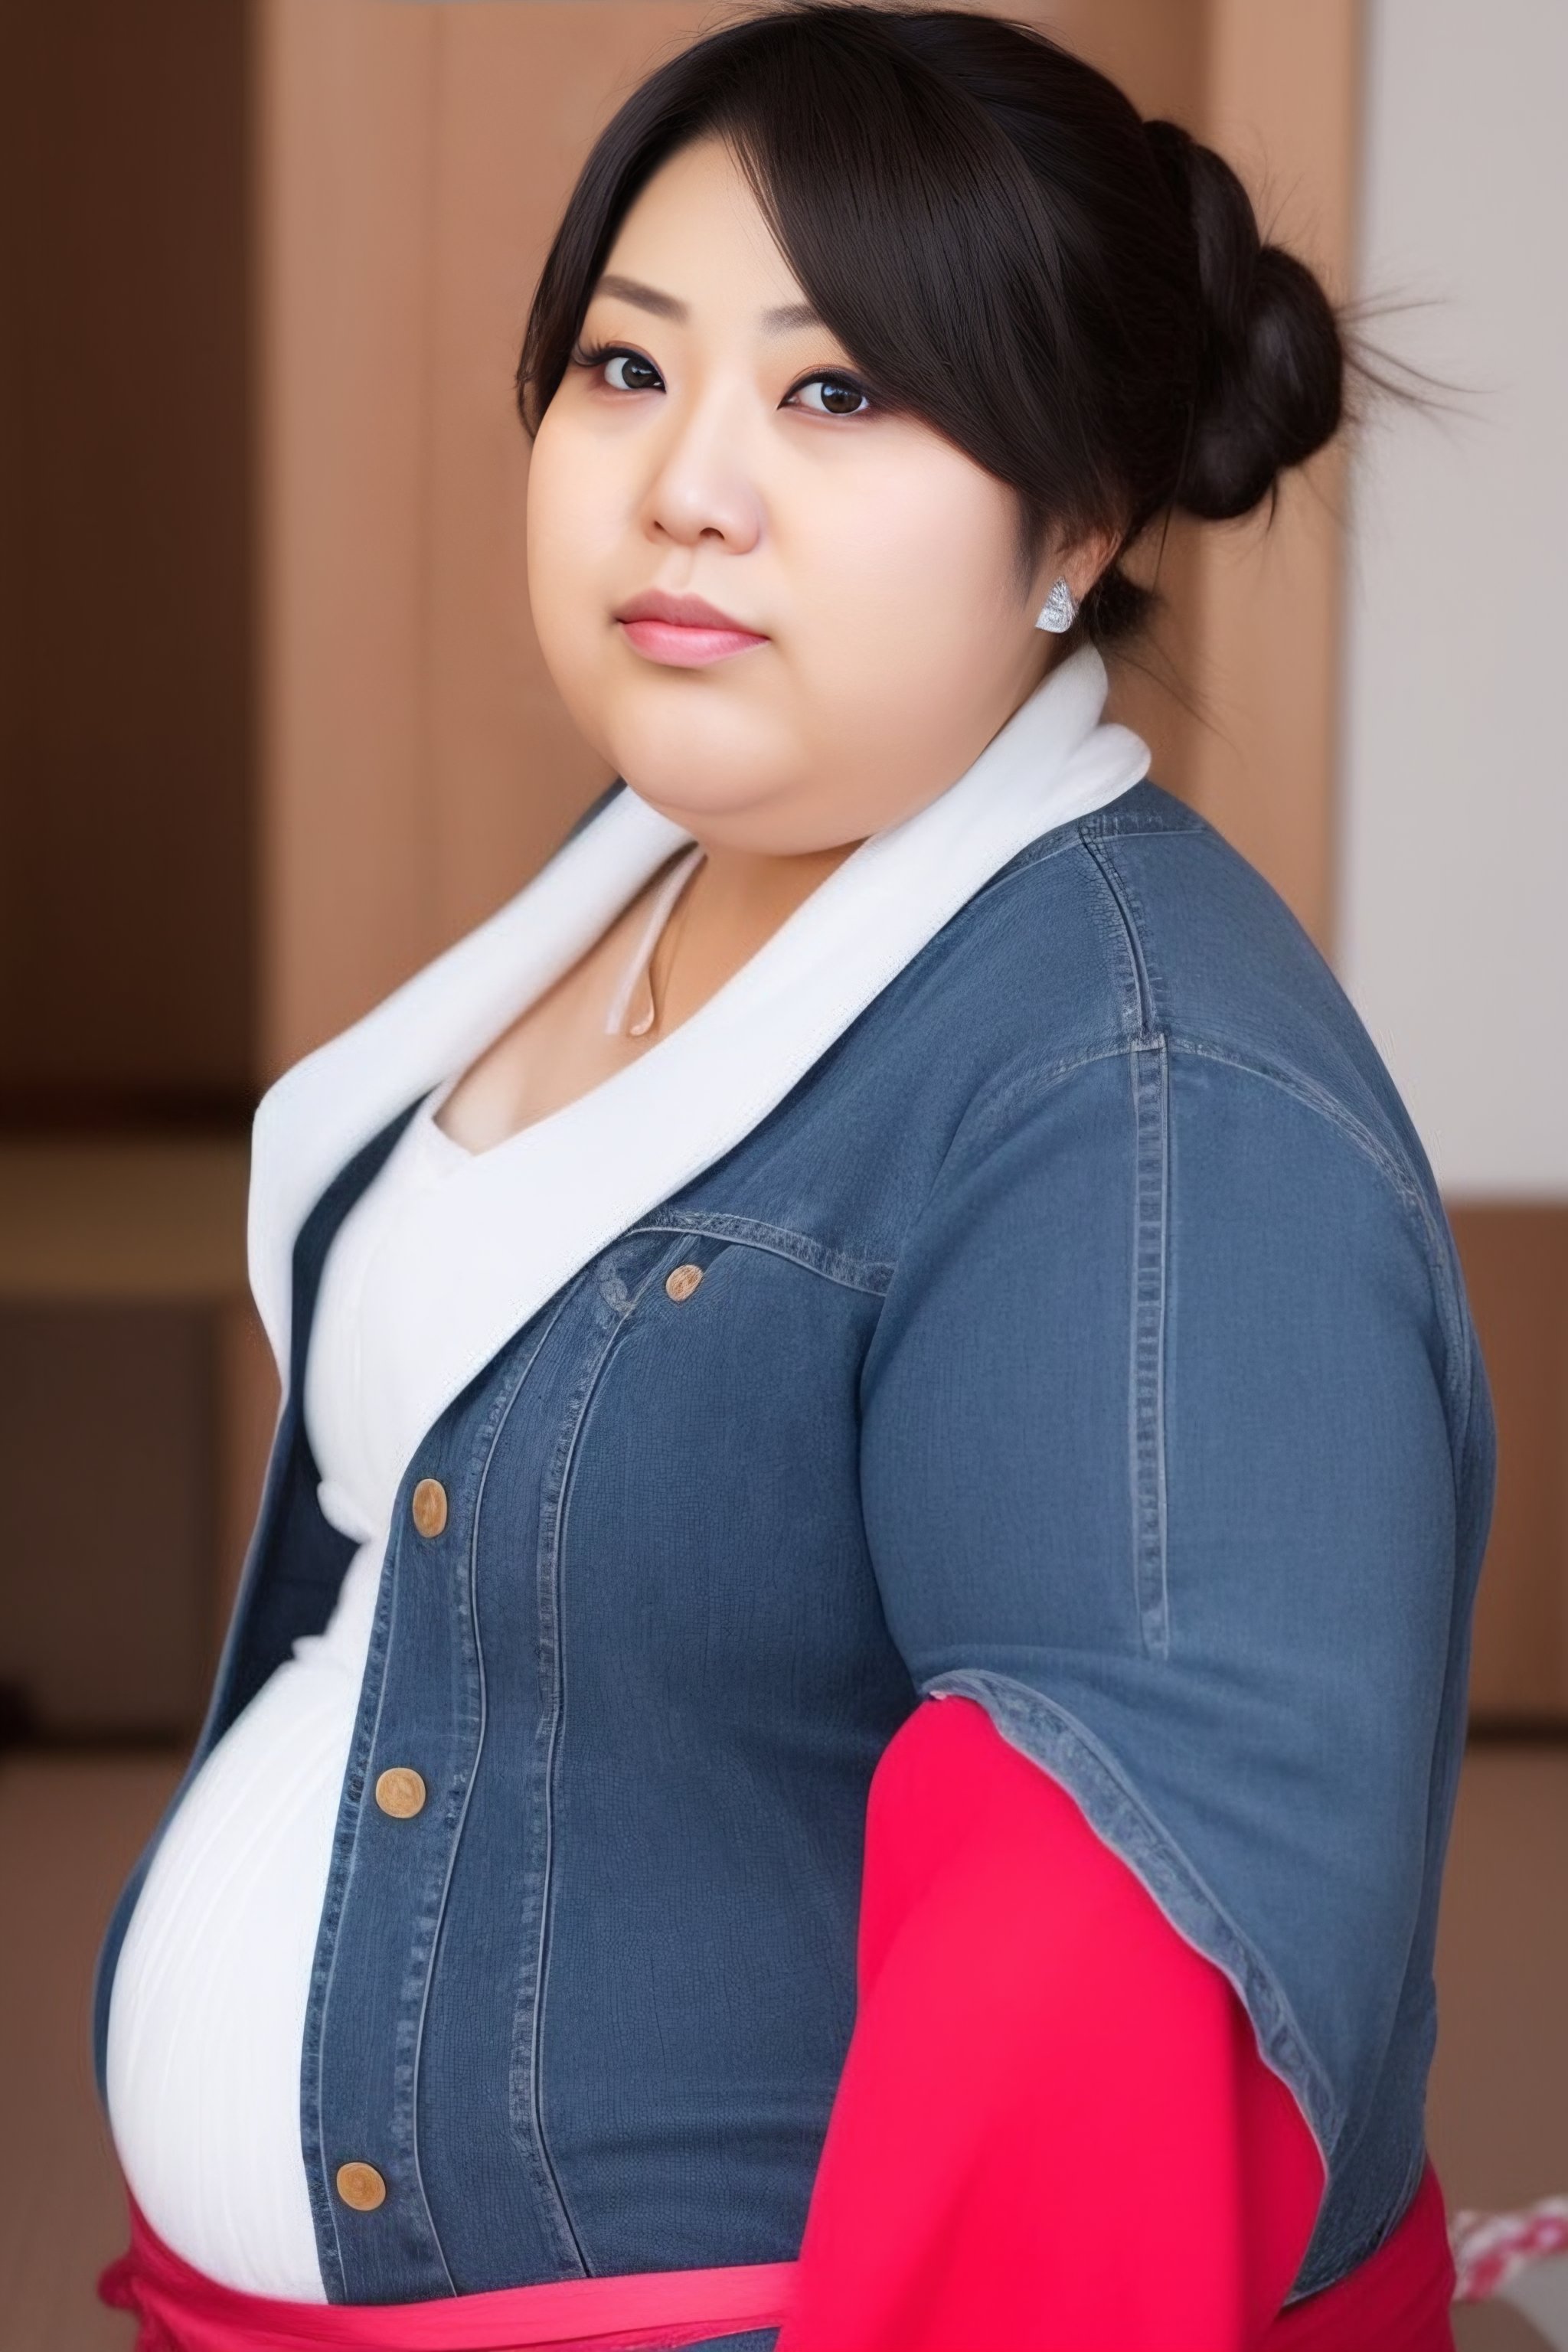 Chubby Japanese Girl 22 By Noeivy On Deviantart